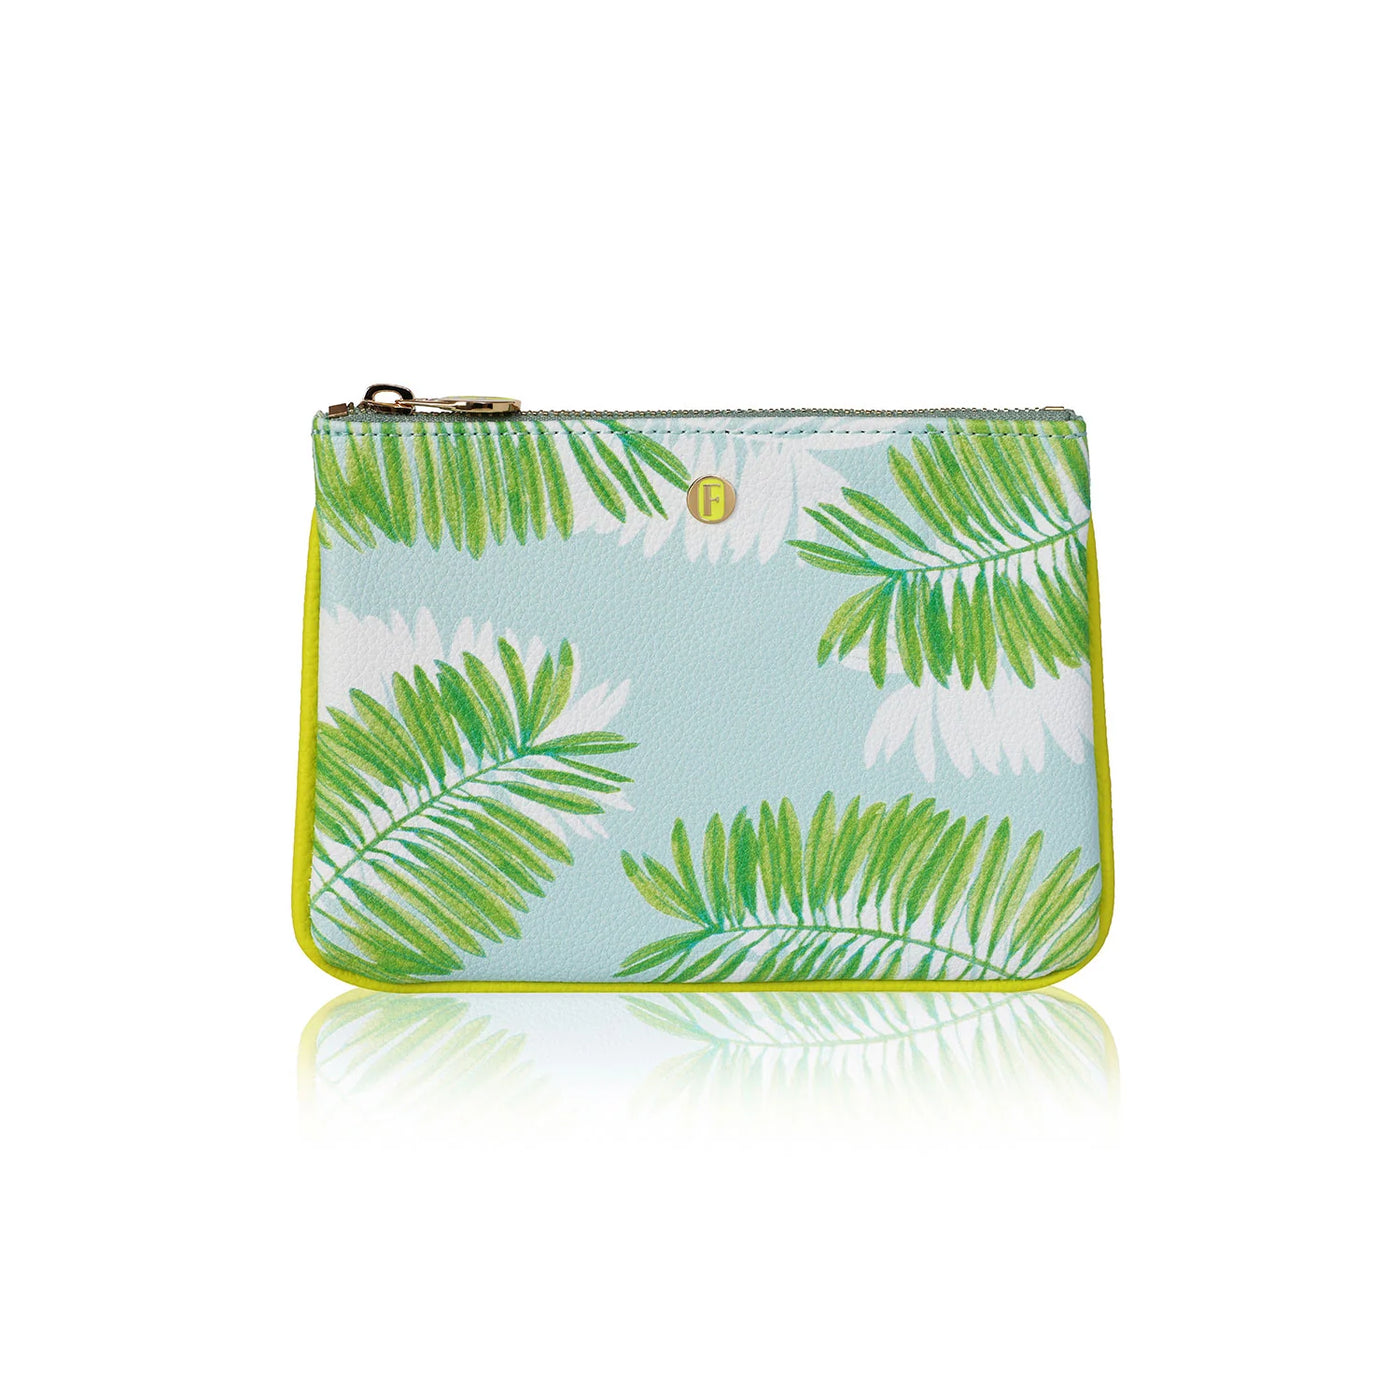 FONFIQUE - Lilium Poşet Çanta Yeşil Palmiyeler